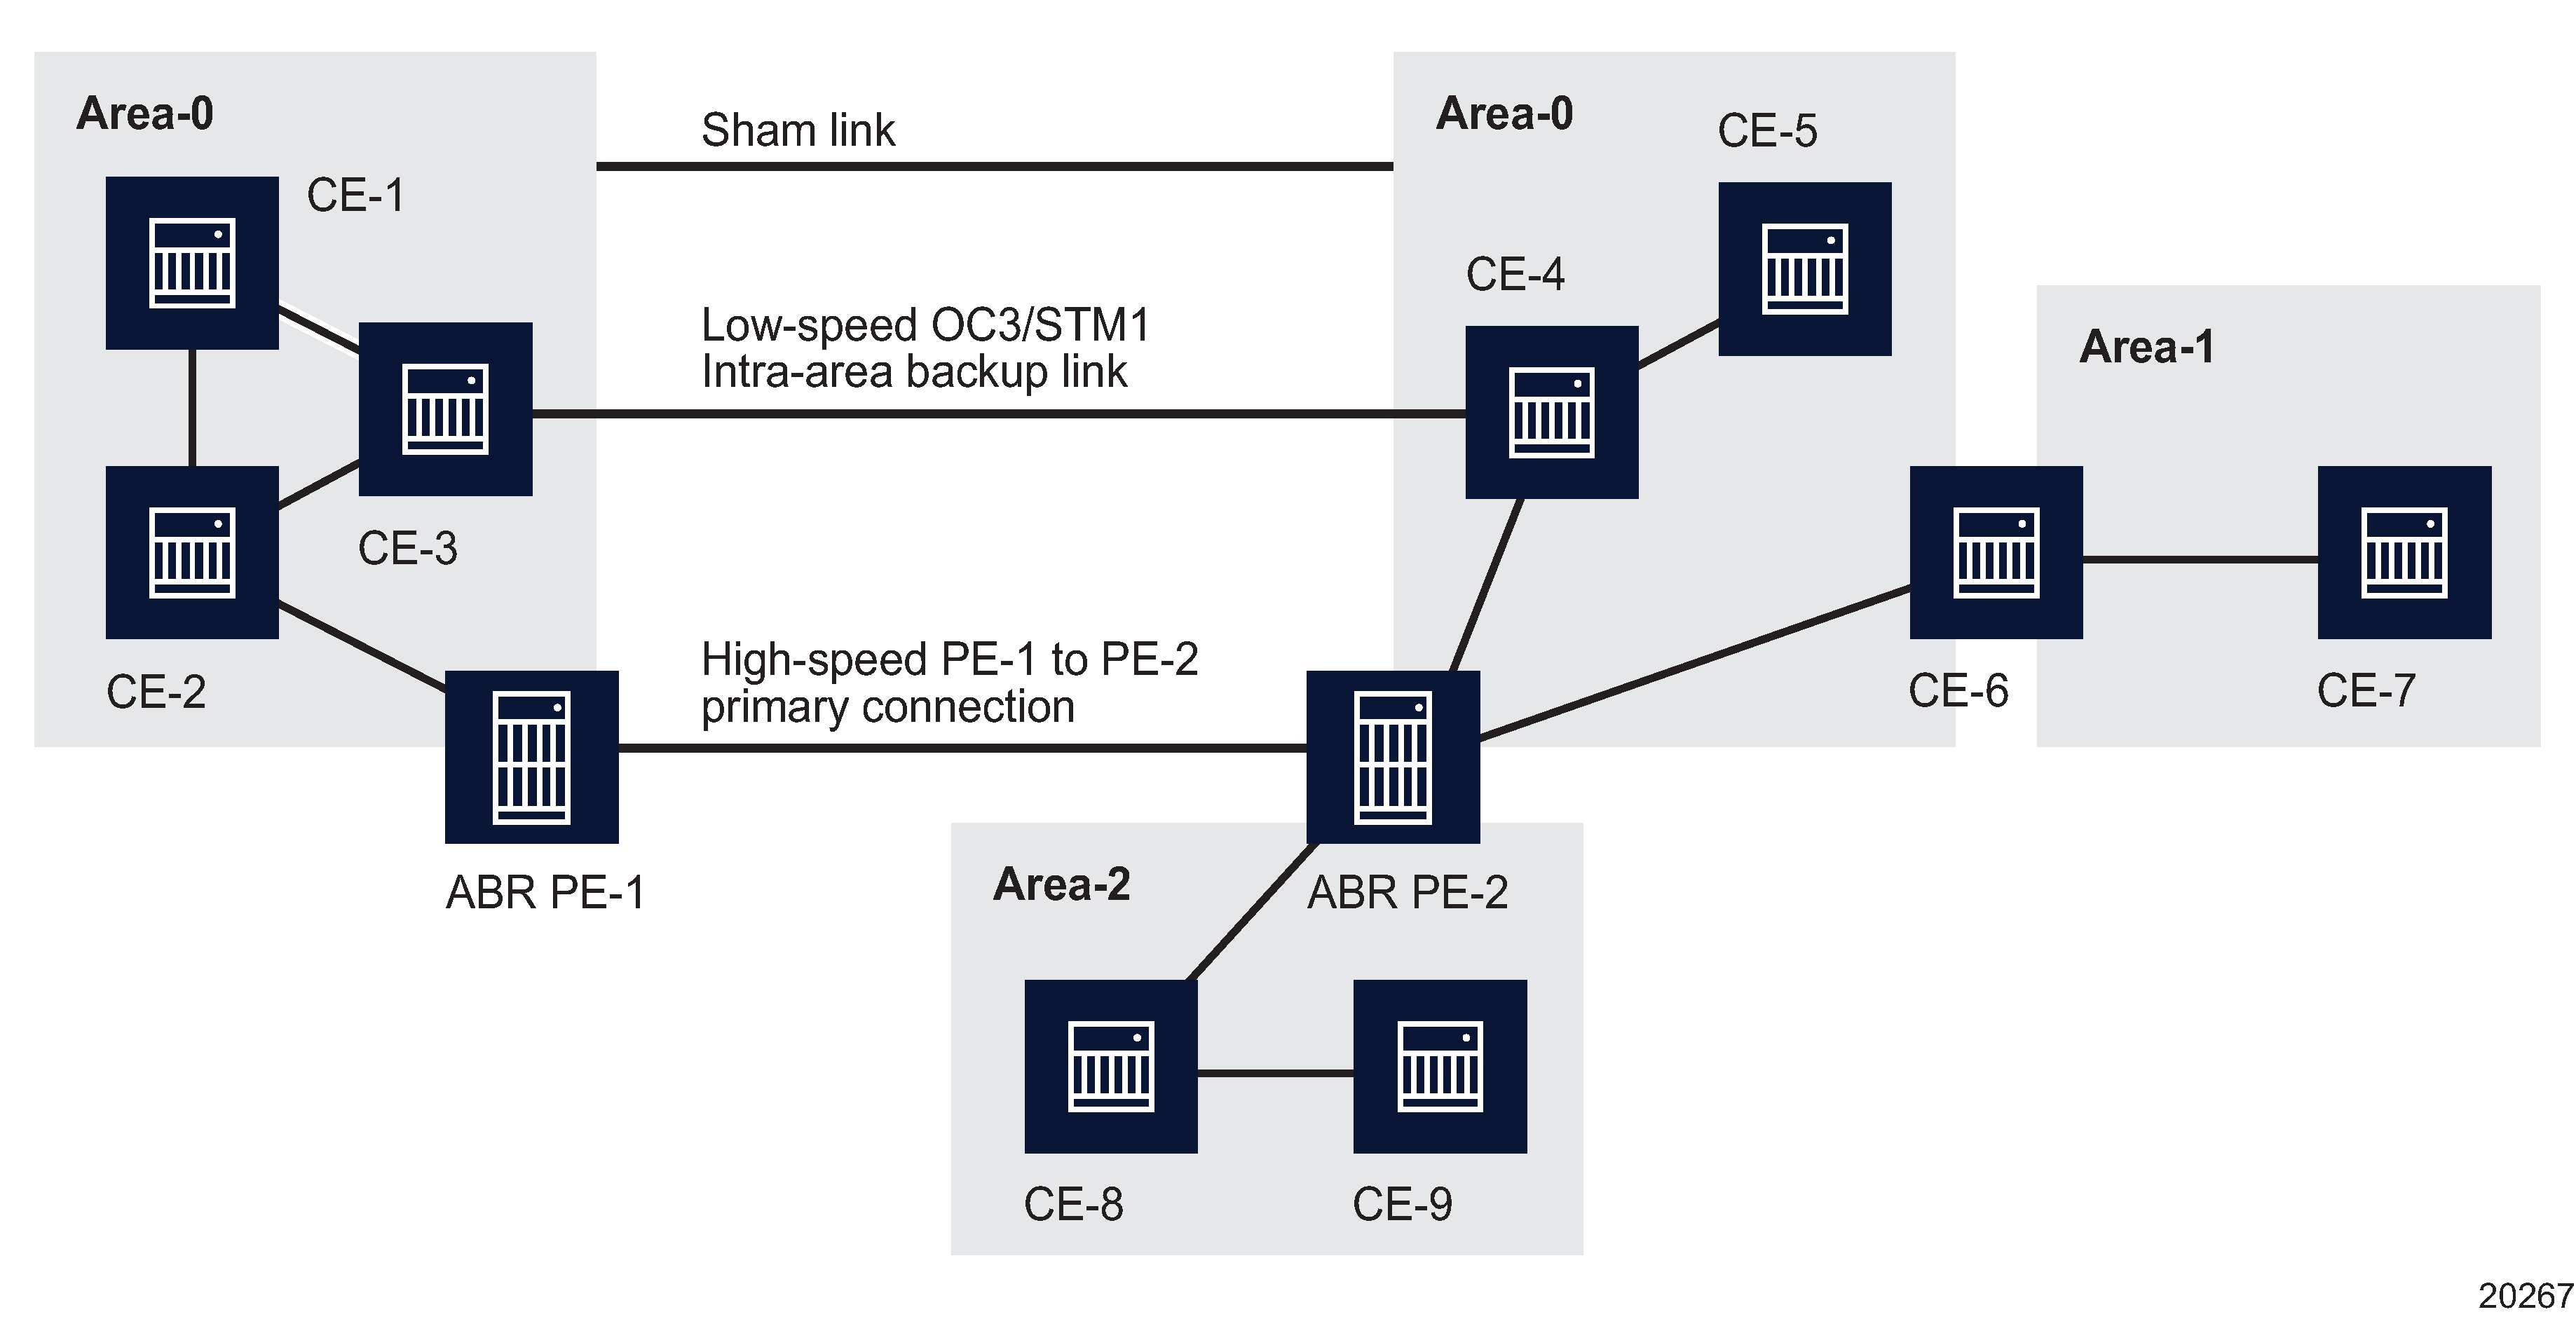 Sham link configuration example